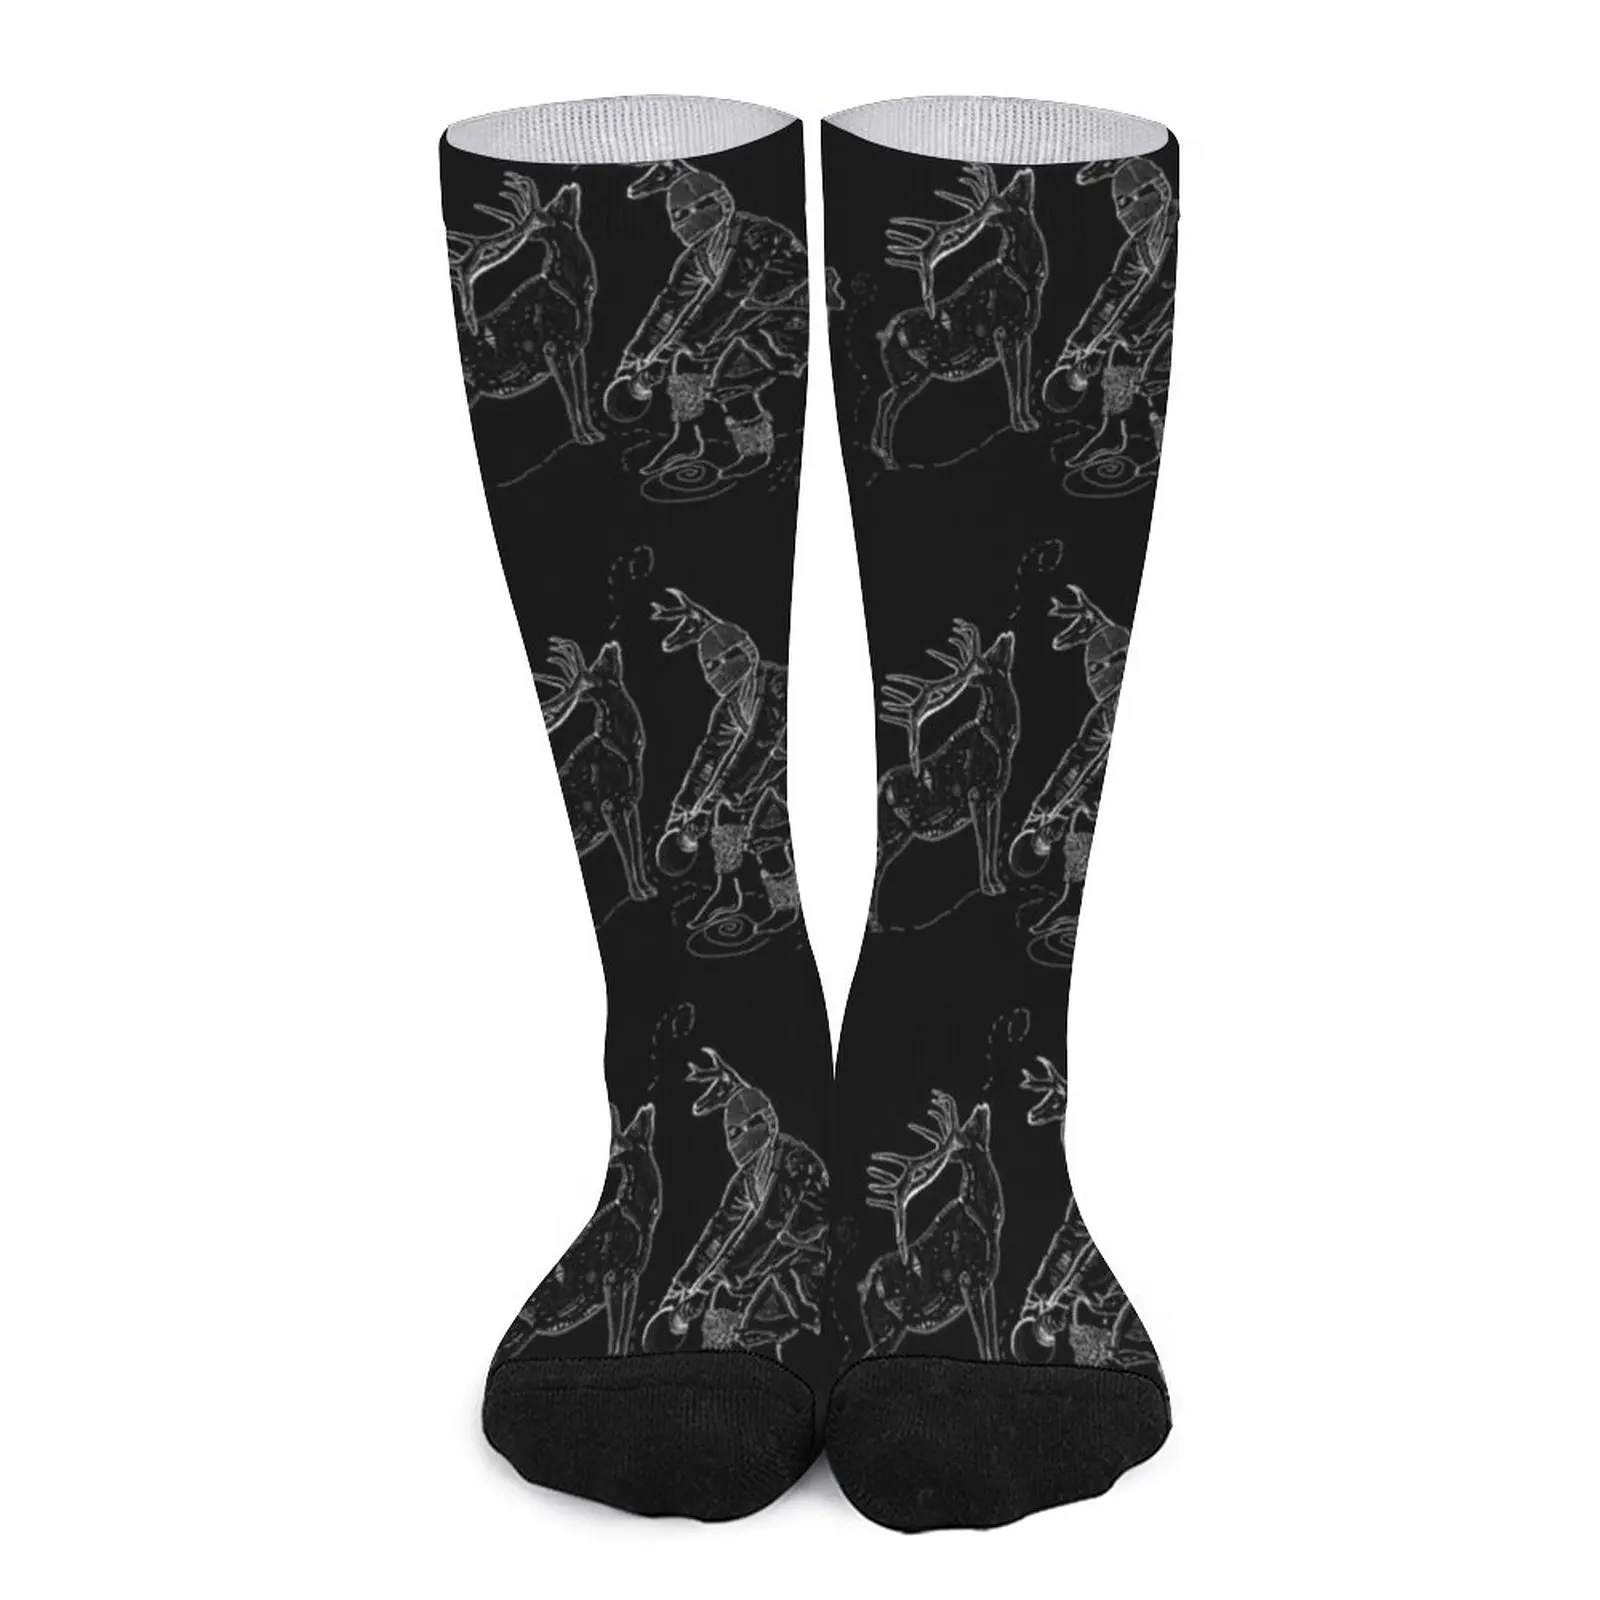 Yaqui Deer Dance Socks Sock man funny gifts golf socks men